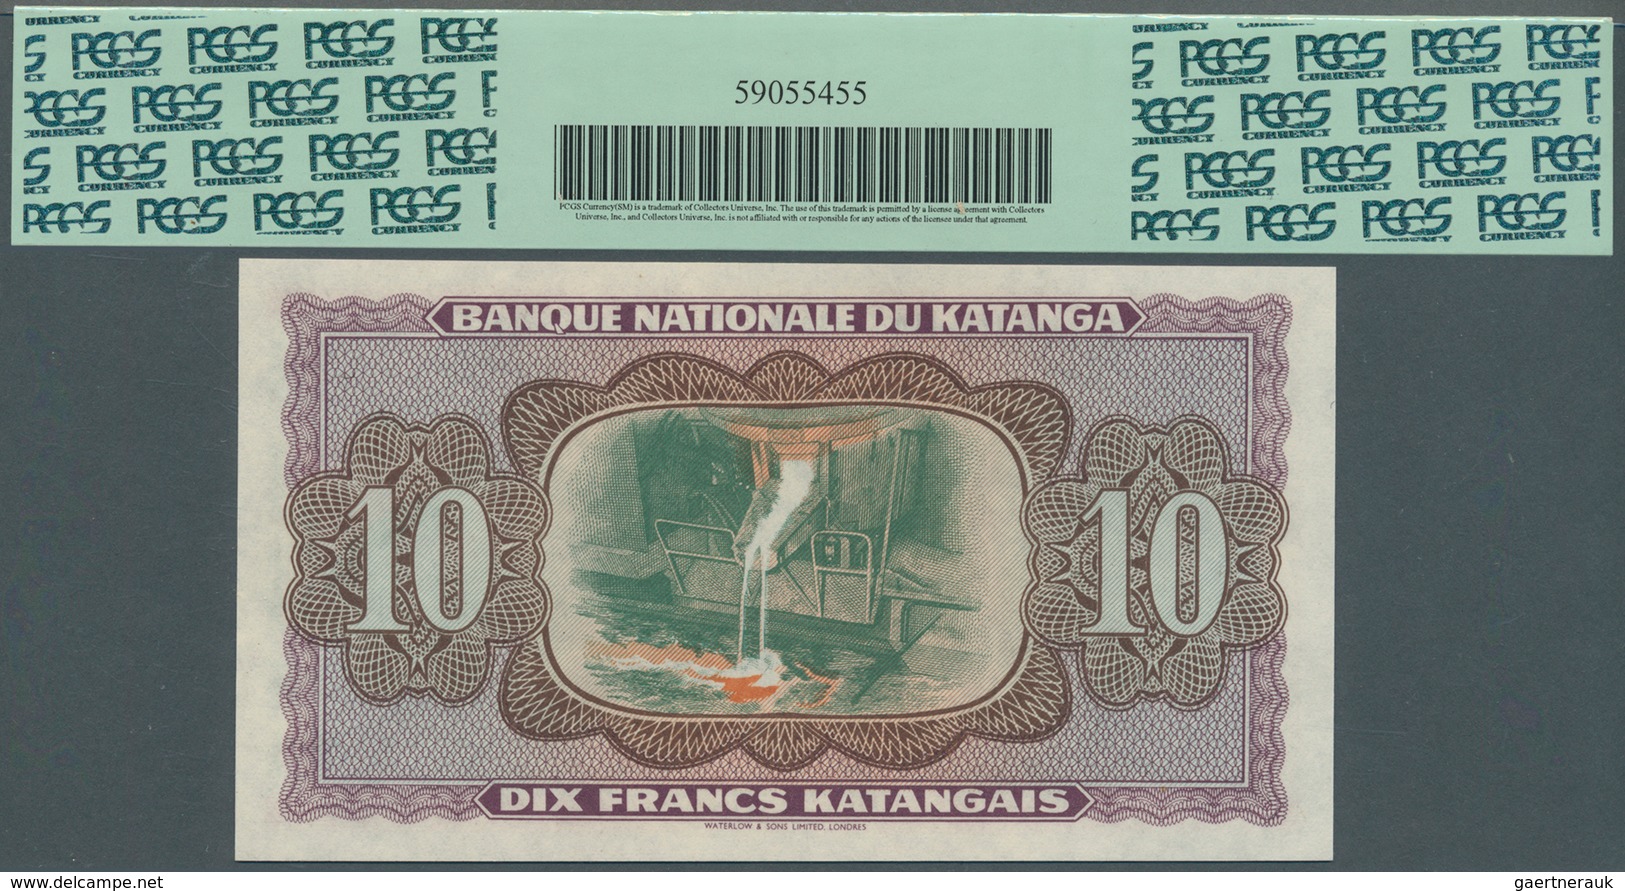 Katanga: Banque Nationale Du Katanga 10 Francs Katangais ND(1960) Remainder Without Date And Serial, - Autres - Afrique